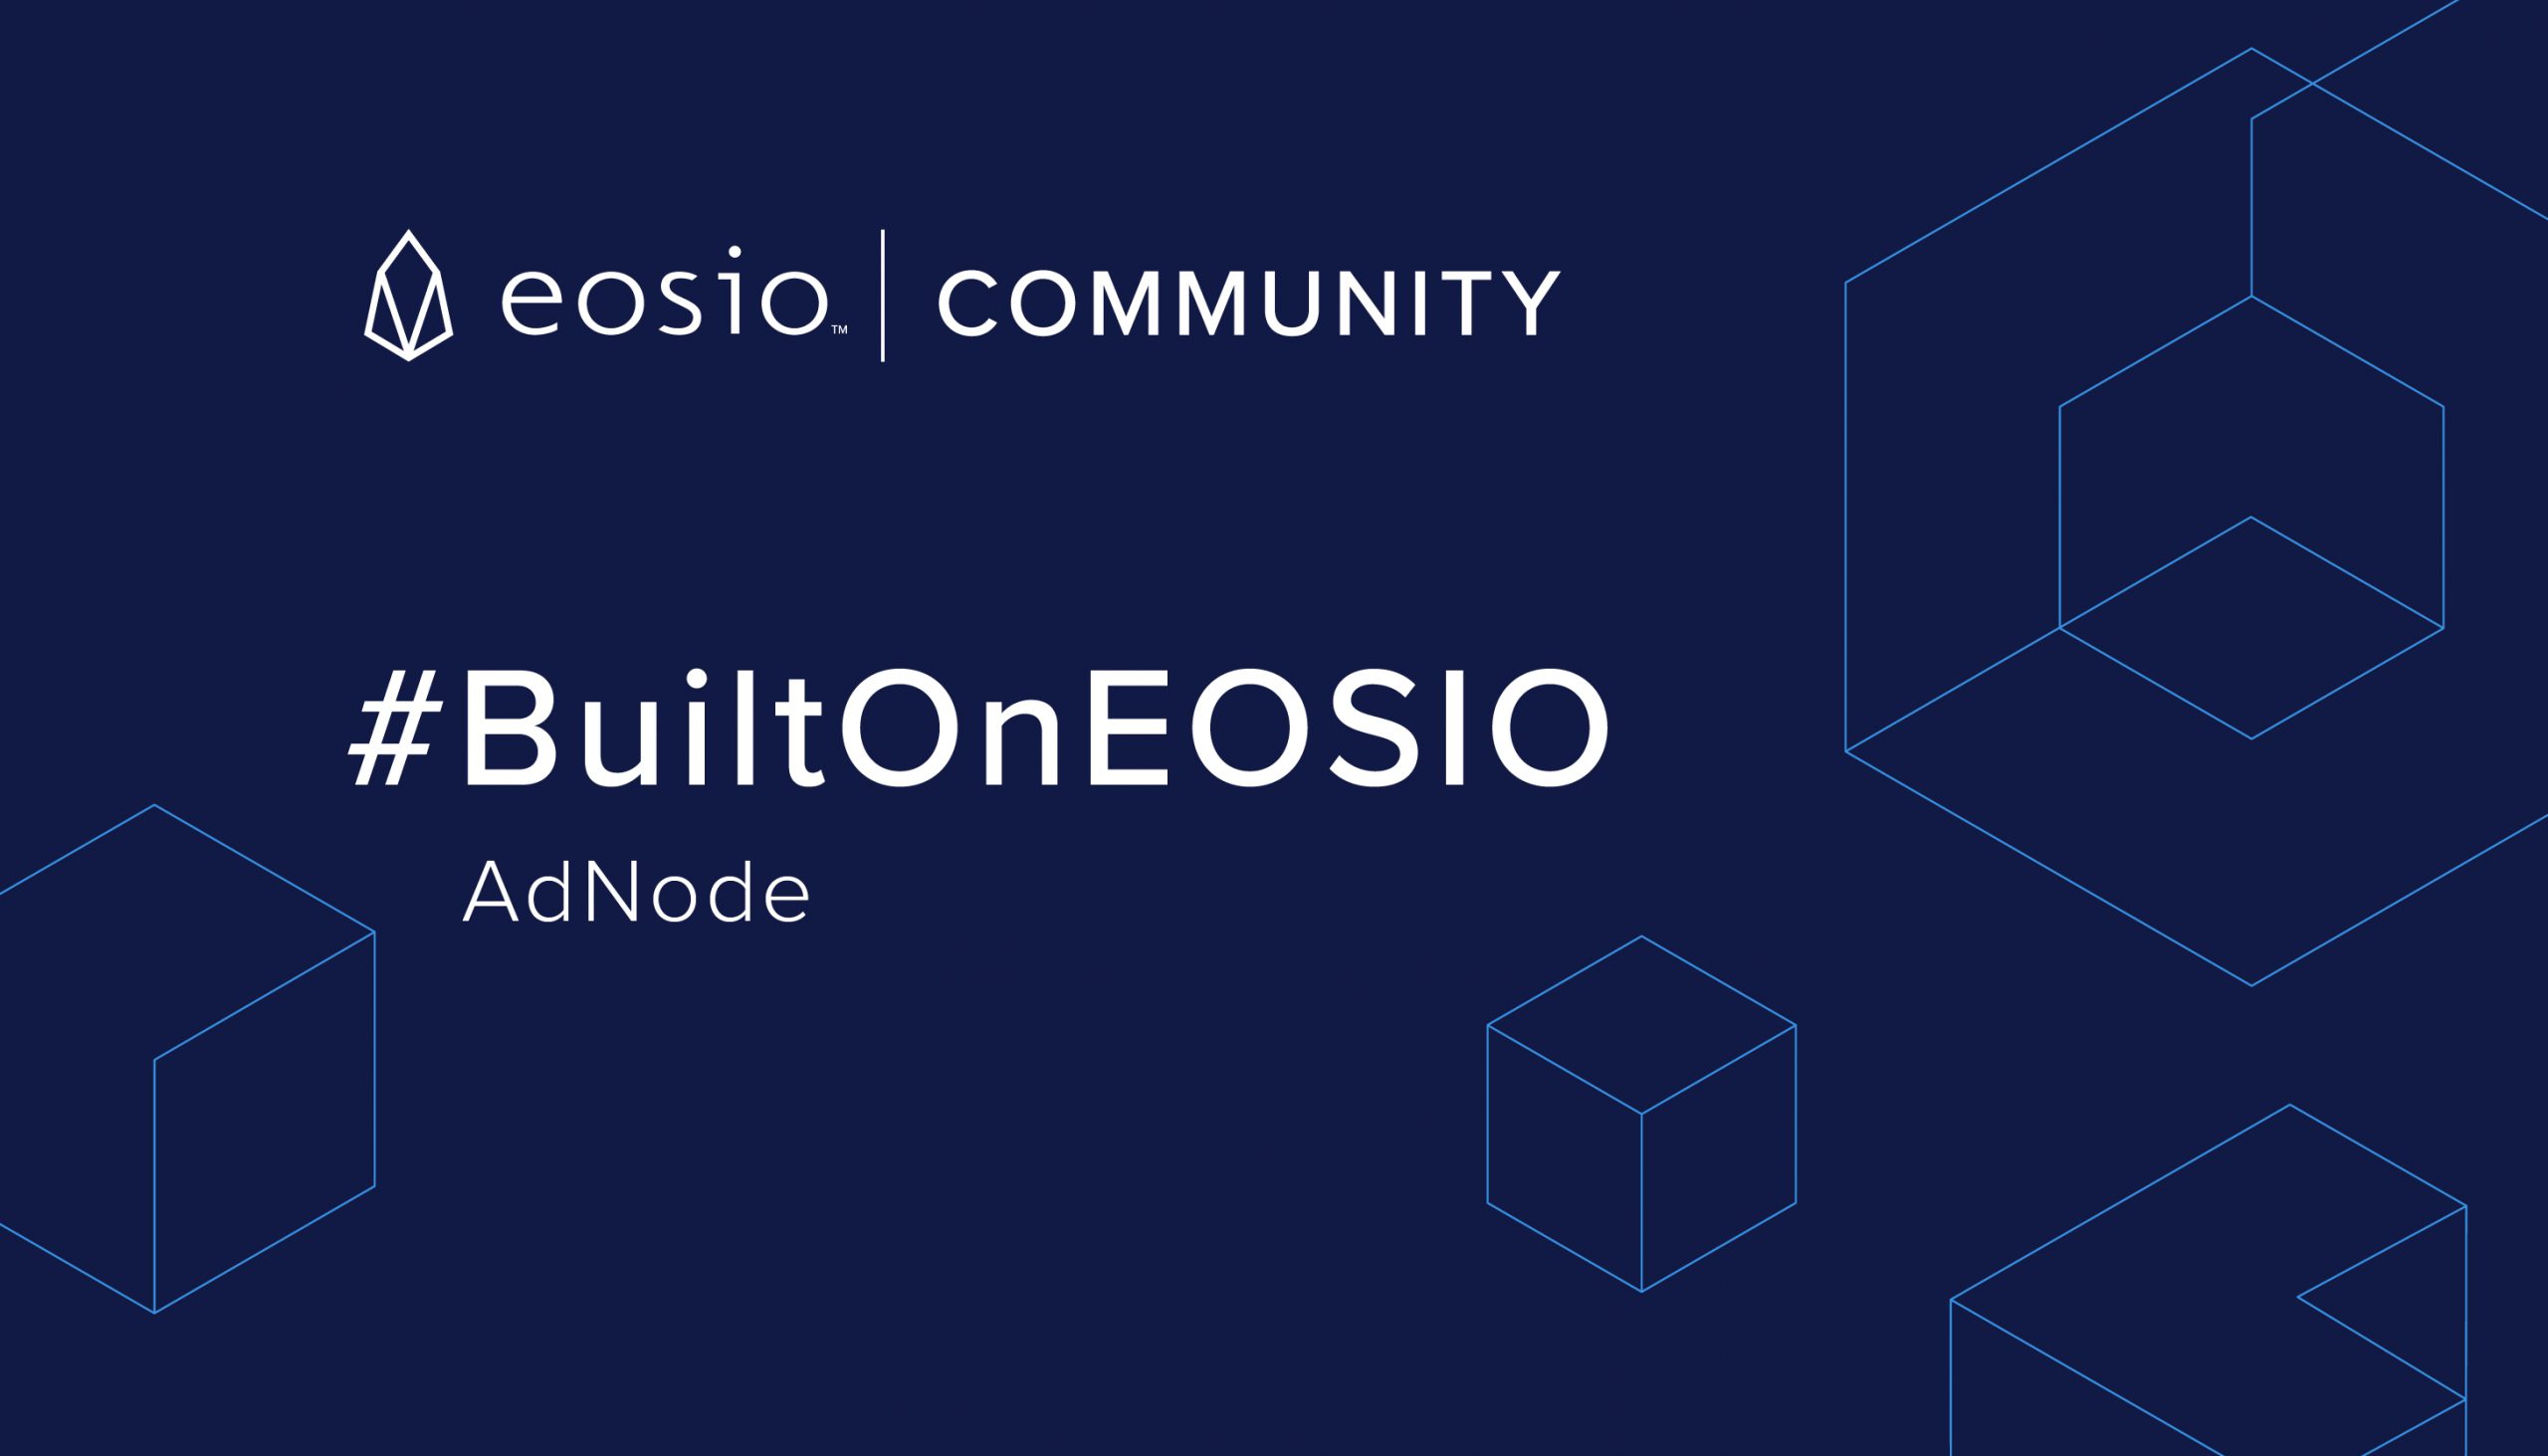 EOSIO Community AdNode